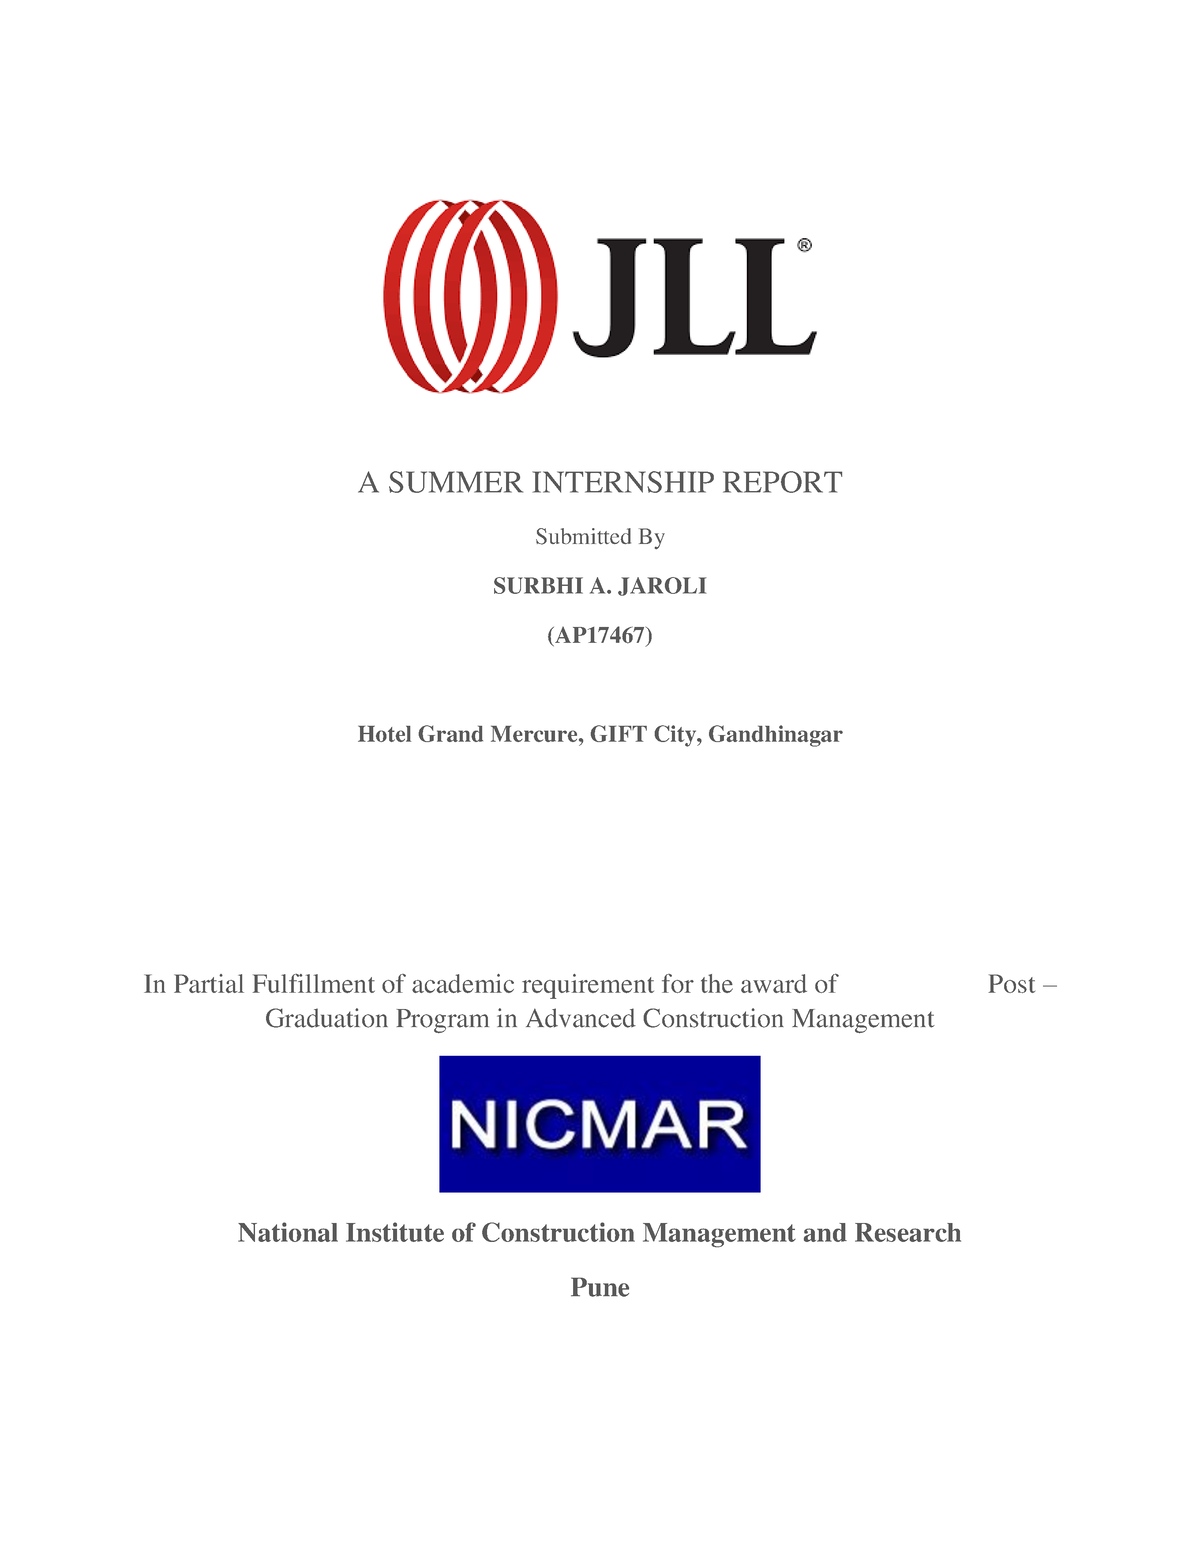 Summer Internship Report at JLL A SUMMER INTERNSHIP REPORT Submitted